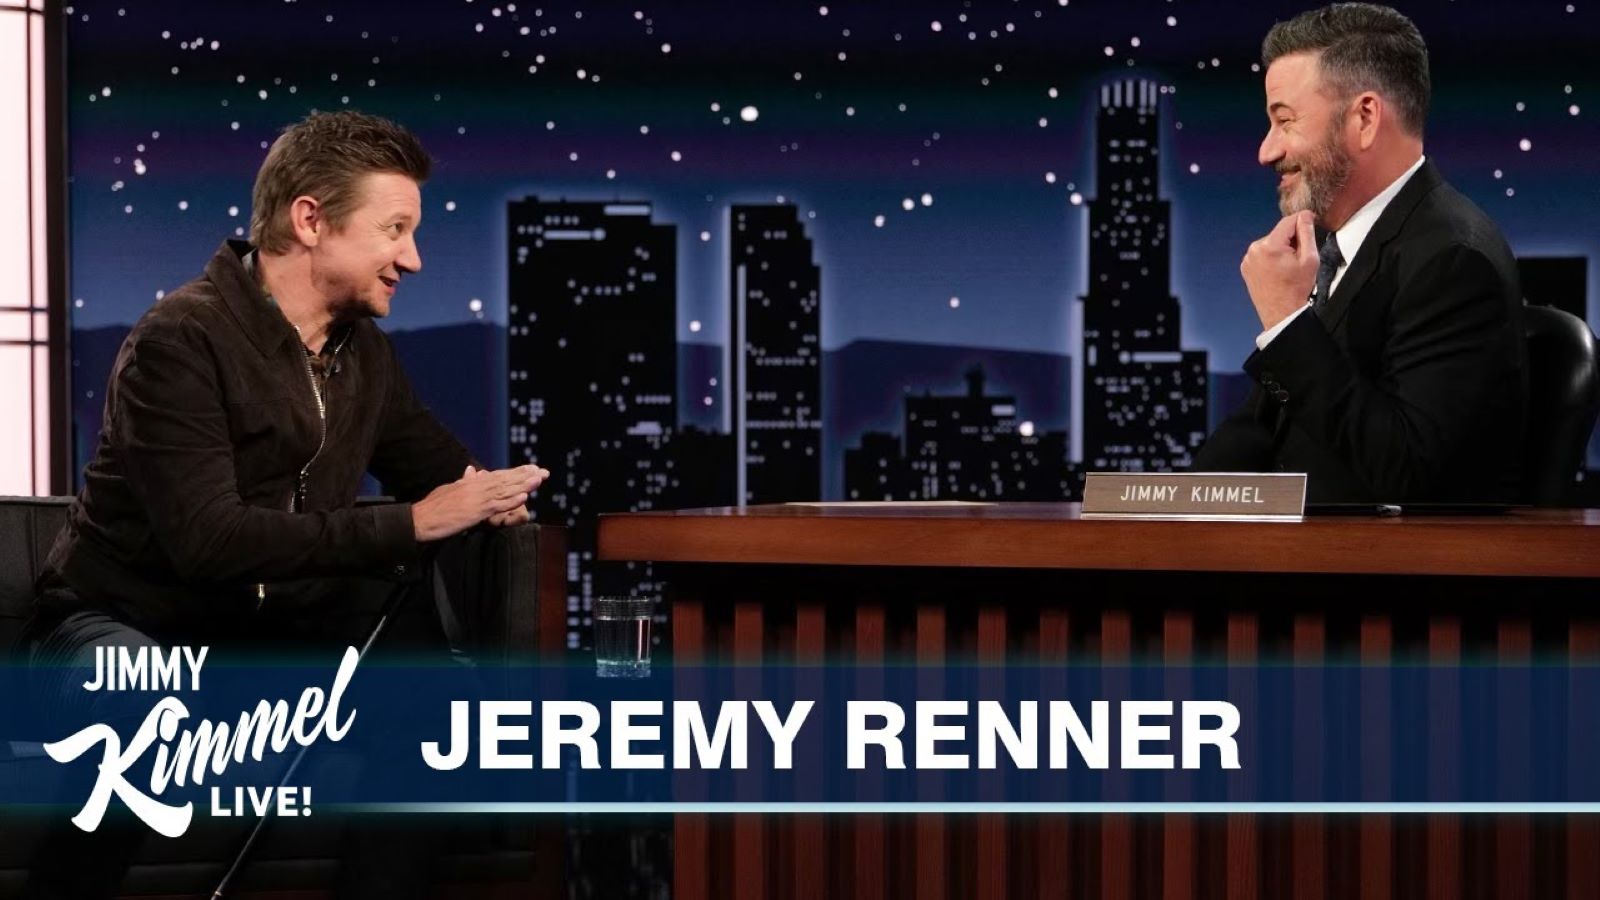 Jeremy Renner guest at Jimmy Kimmel live, Paul Rudd's video message